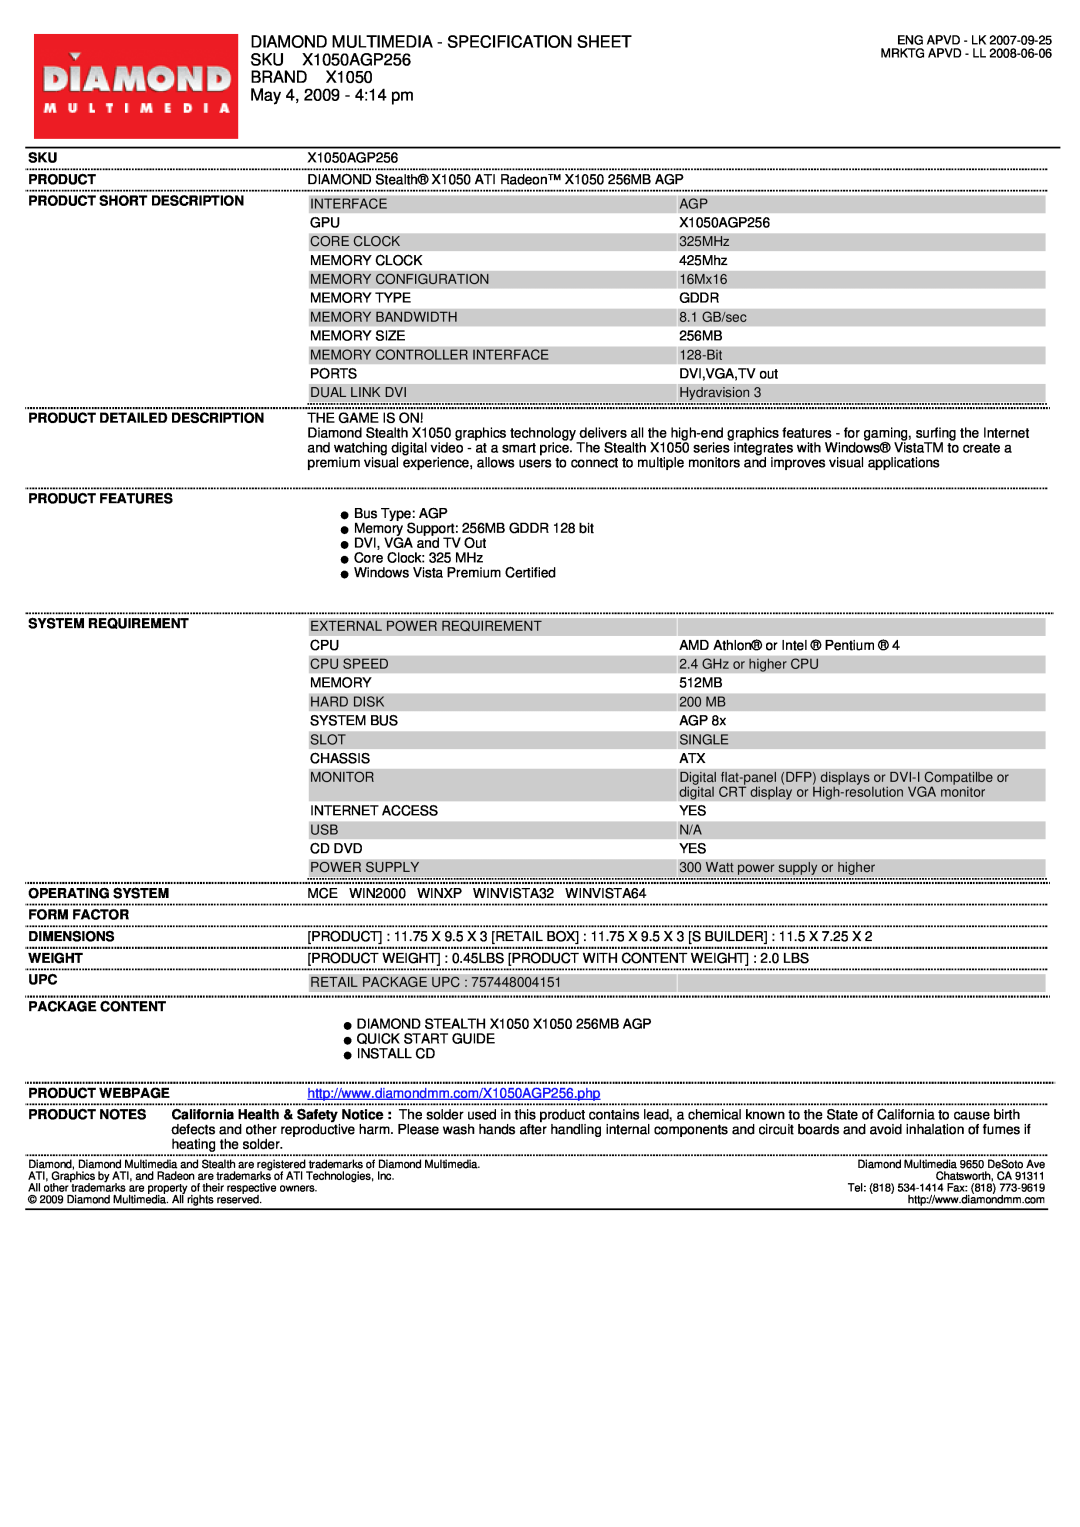 Diamond Multimedia specifications Diamond Multimedia - Specification Sheet, X1050AGP256, Brand, May 4, 2009 - 414 pm 